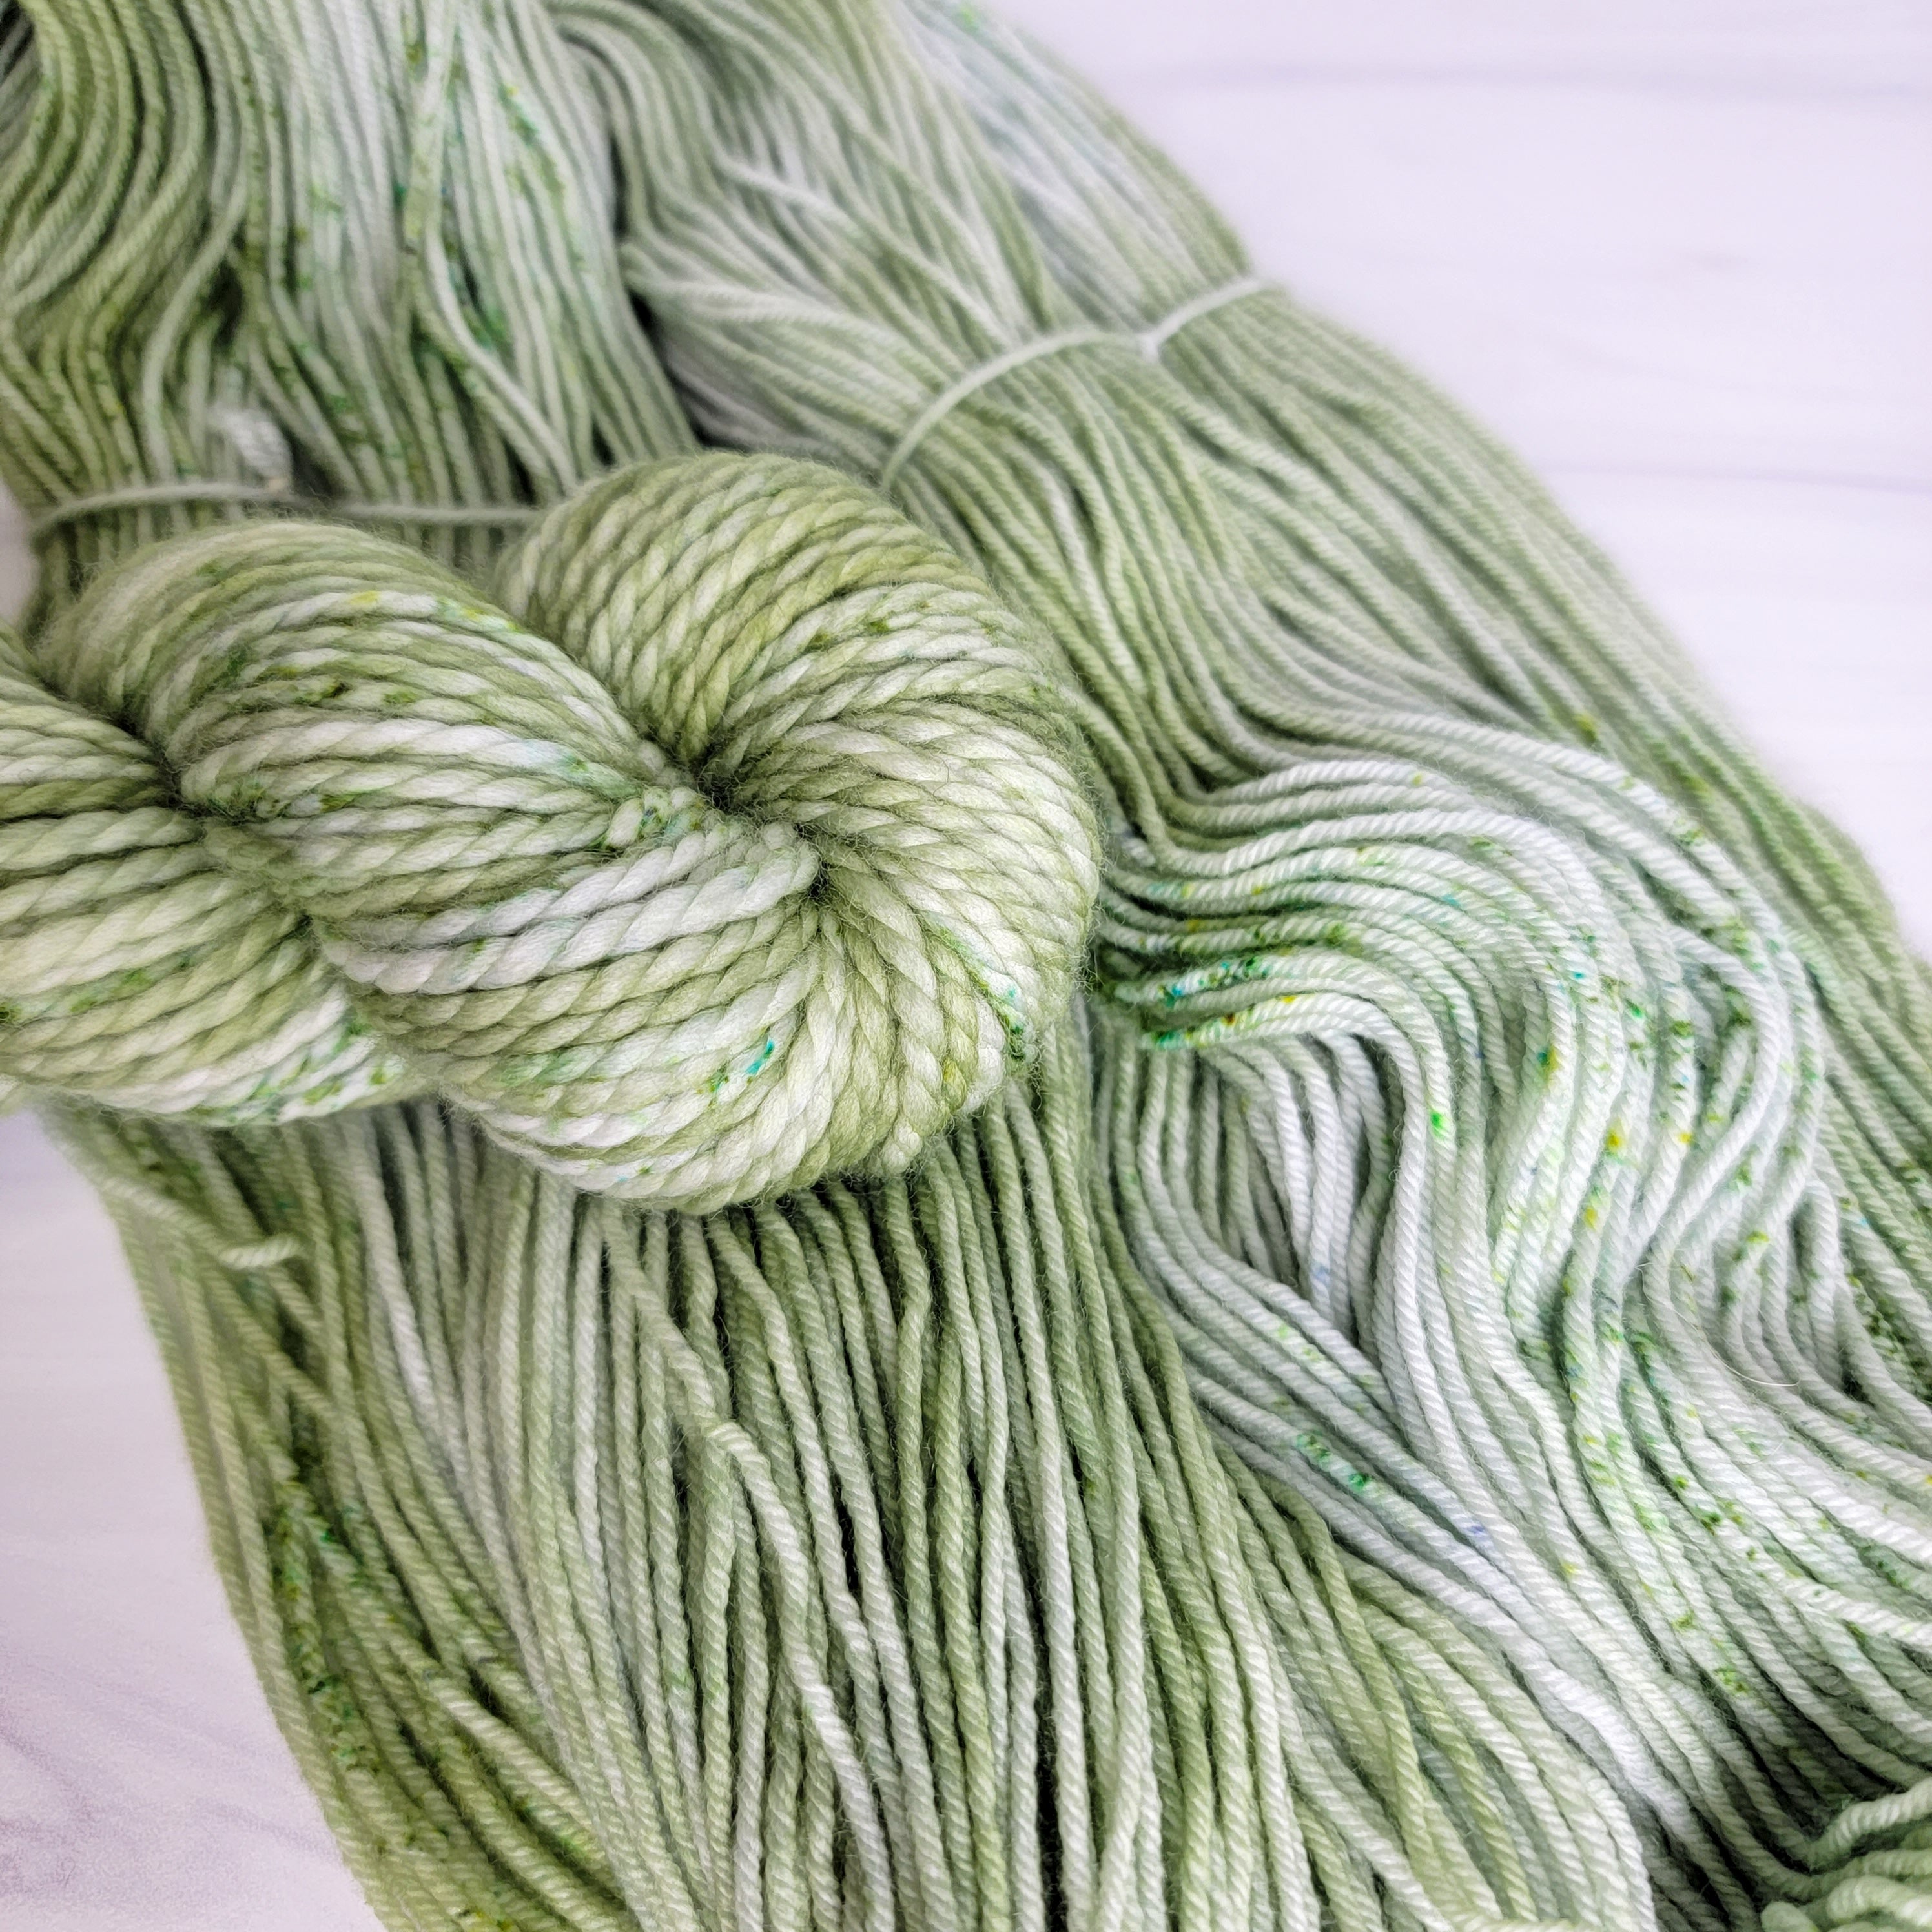 Rhea - Hand dyed Variegated yarn - Fingering to bulky- Greek